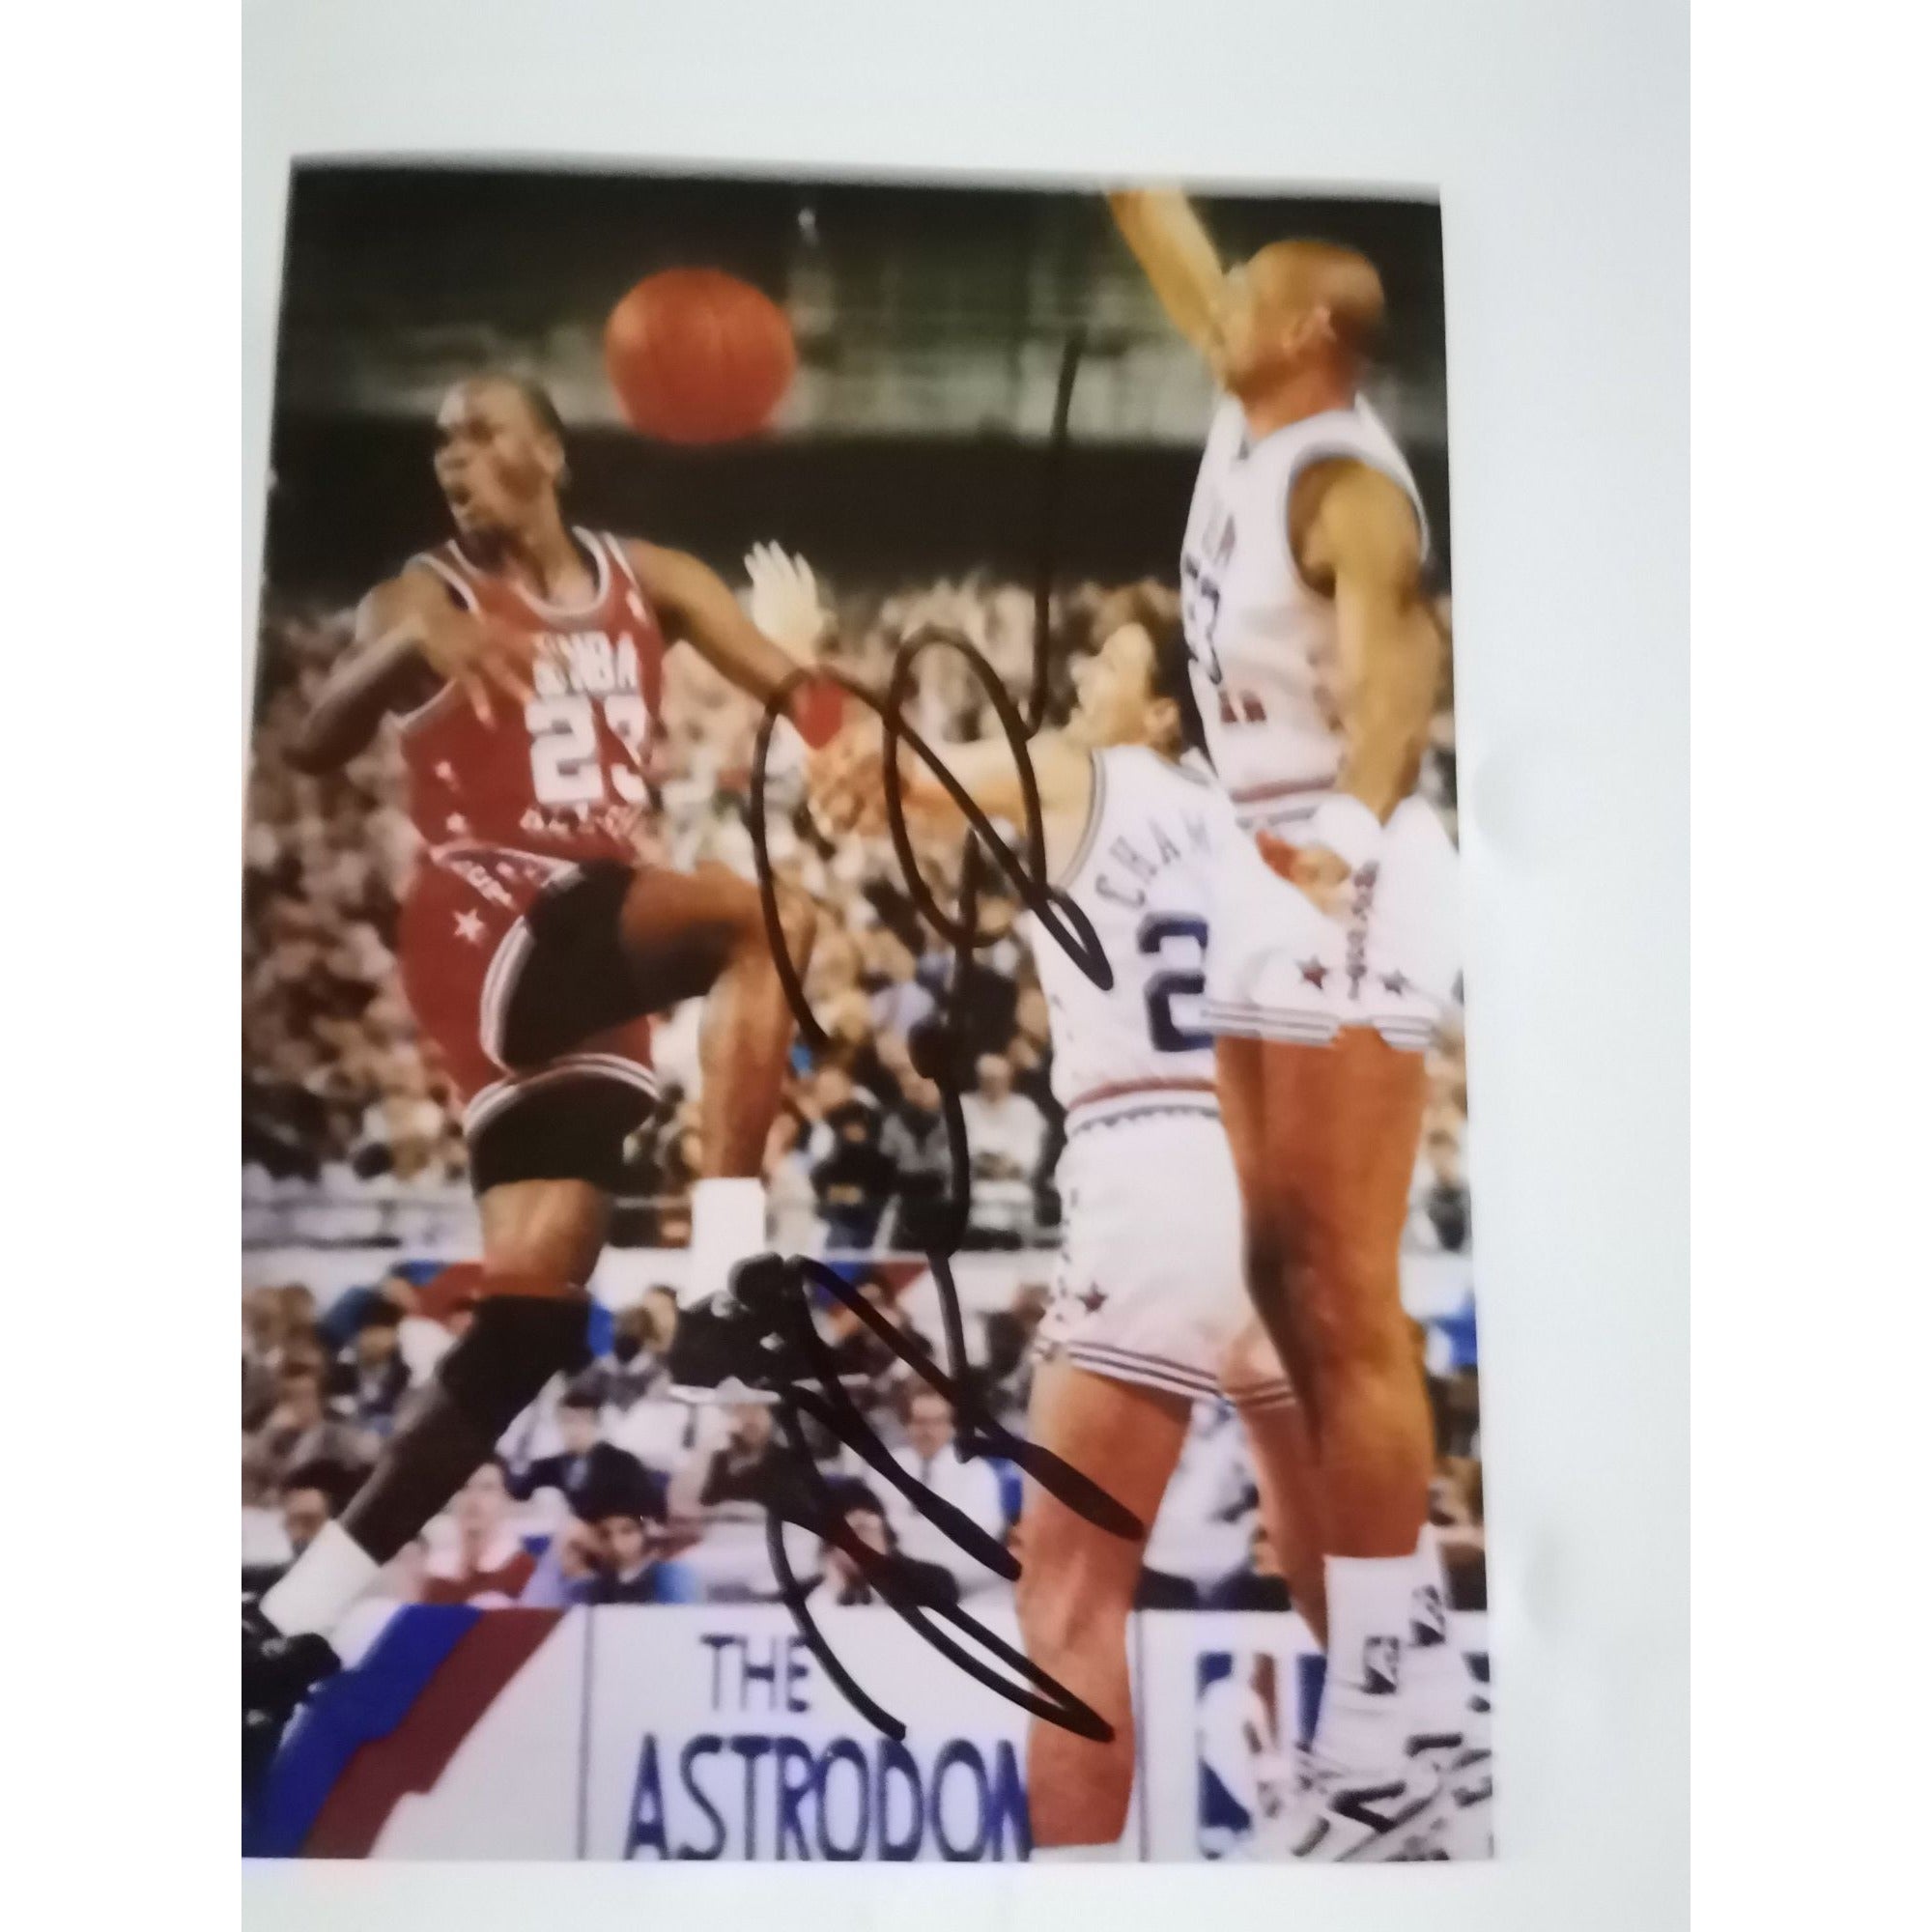 Michael Jordan Chicago Bulls 5 x 7 photo signed with proof